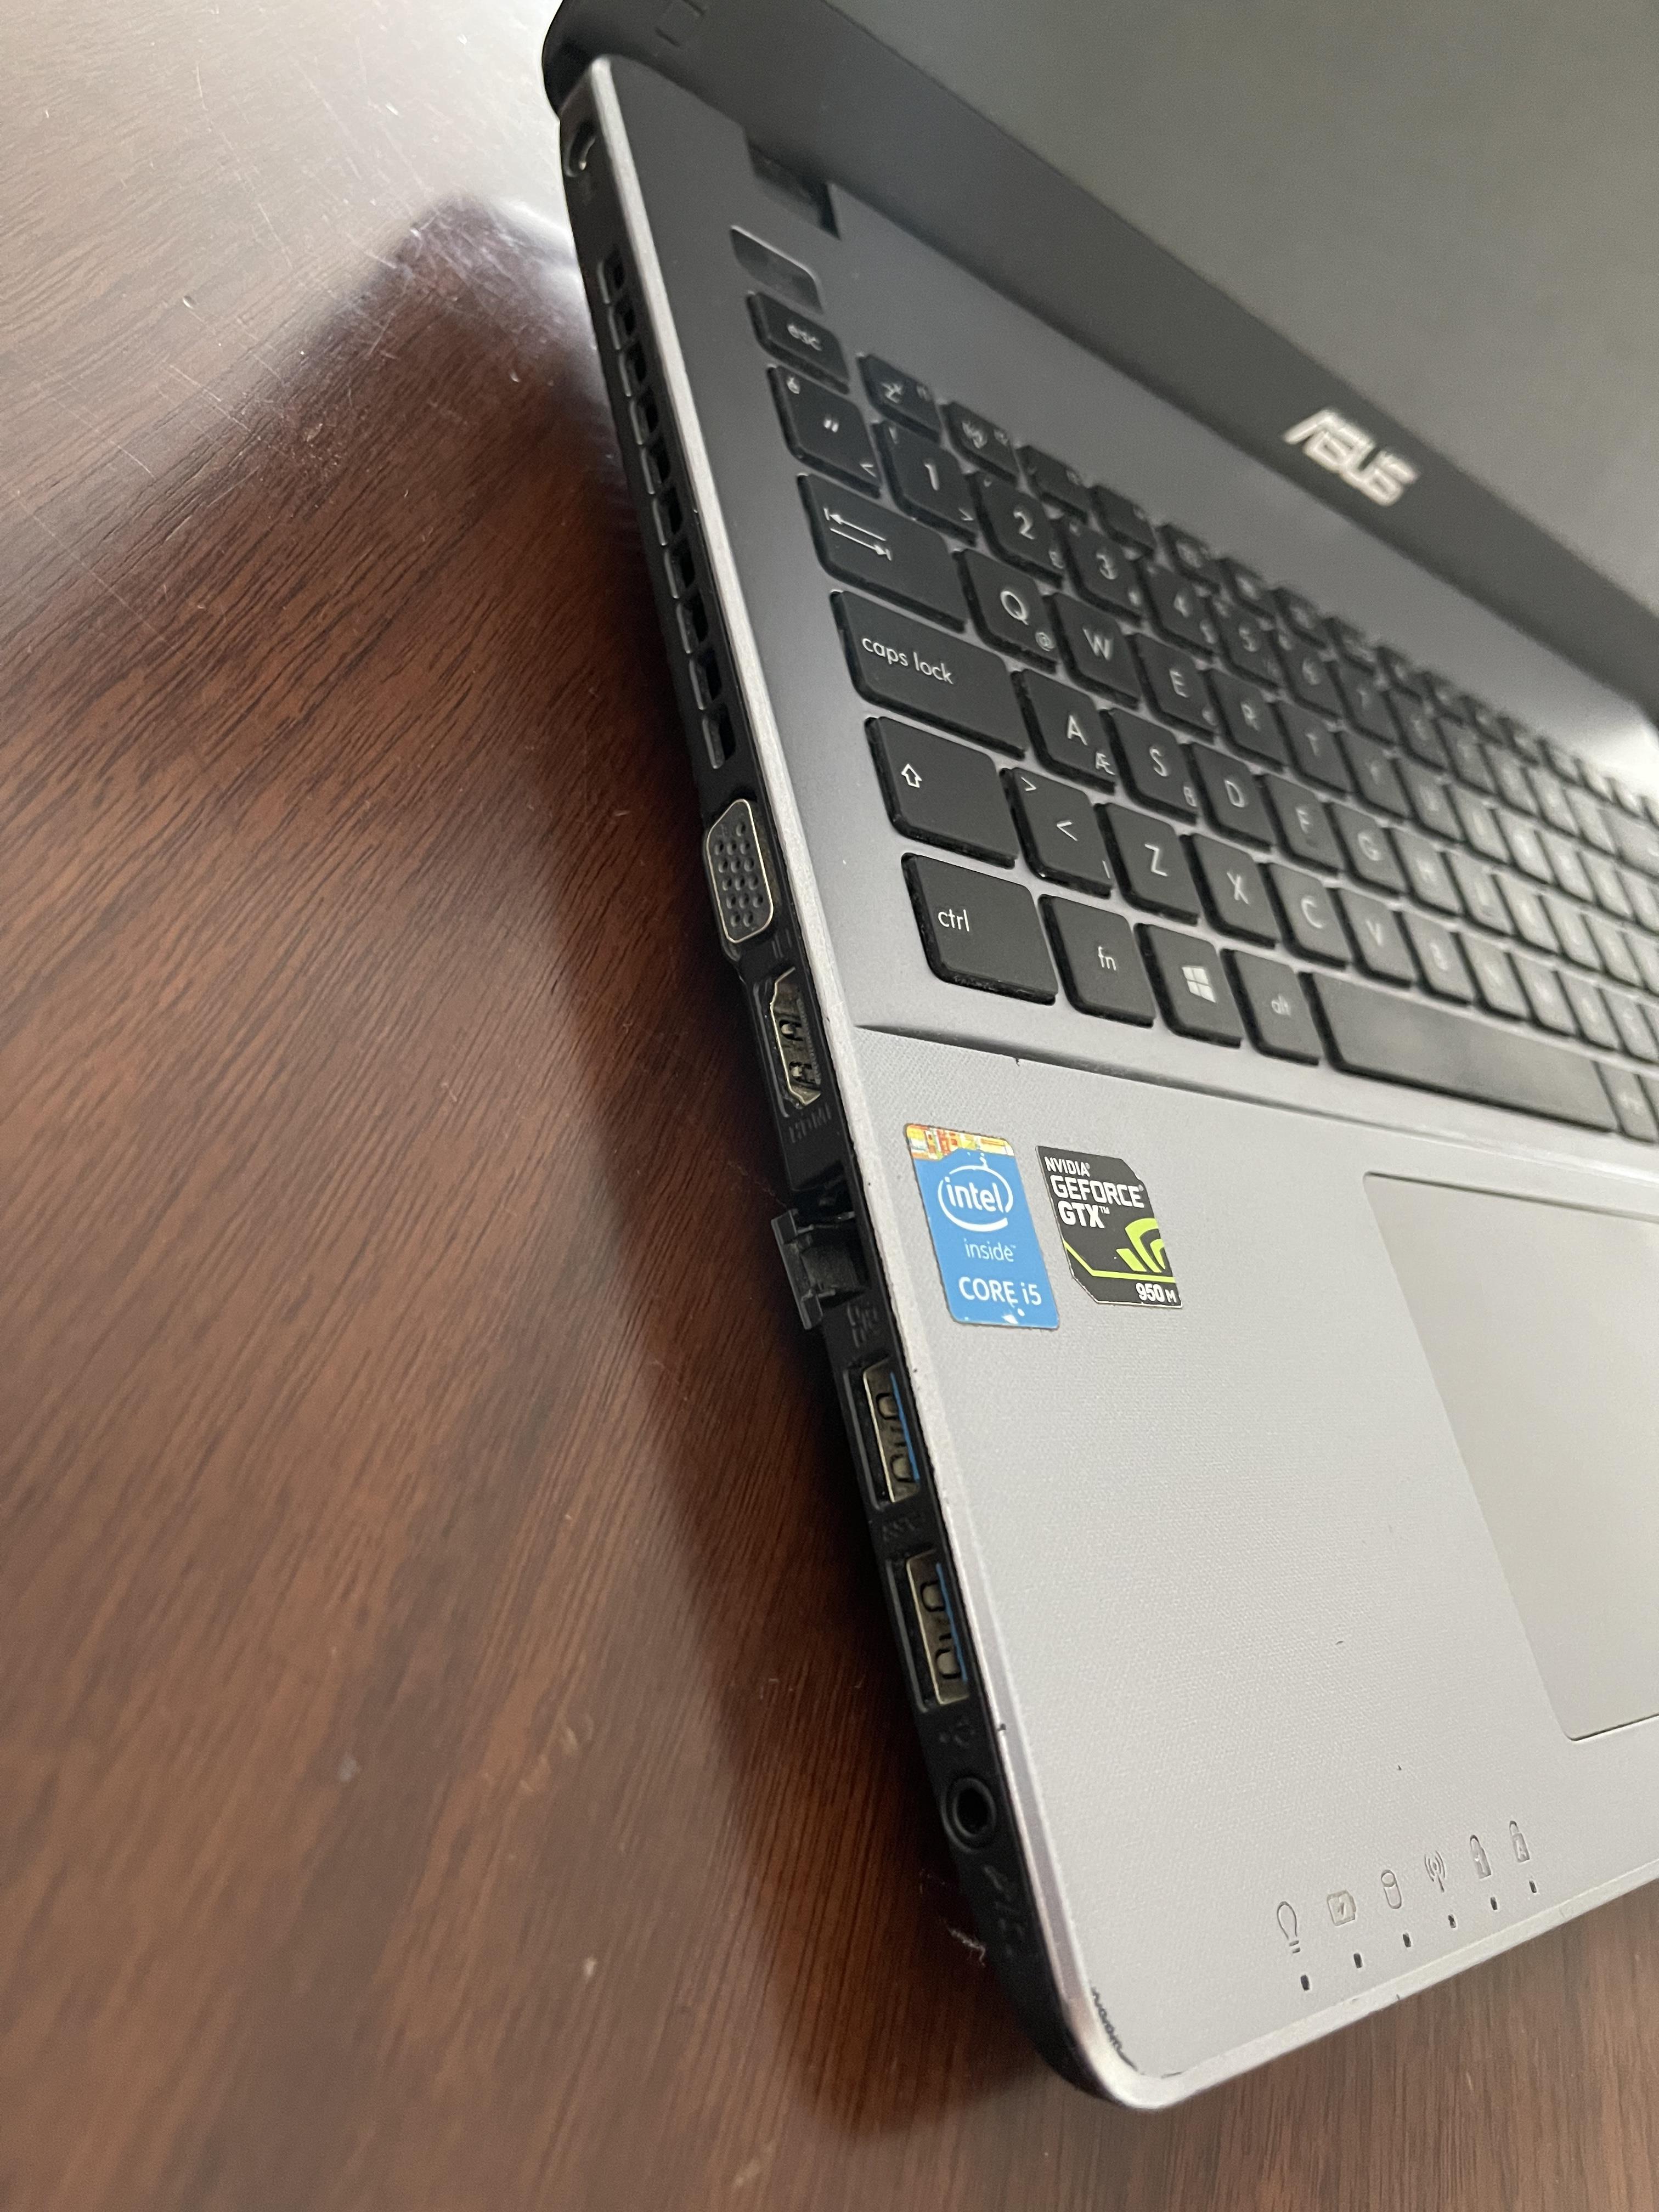 Asus X550J Laptop - i5 4200H @ 2.80 GHz, GeForce GTX 950M Ekran karti, 12GB  Ram, 750GB HDD | DonanımHaber Forum